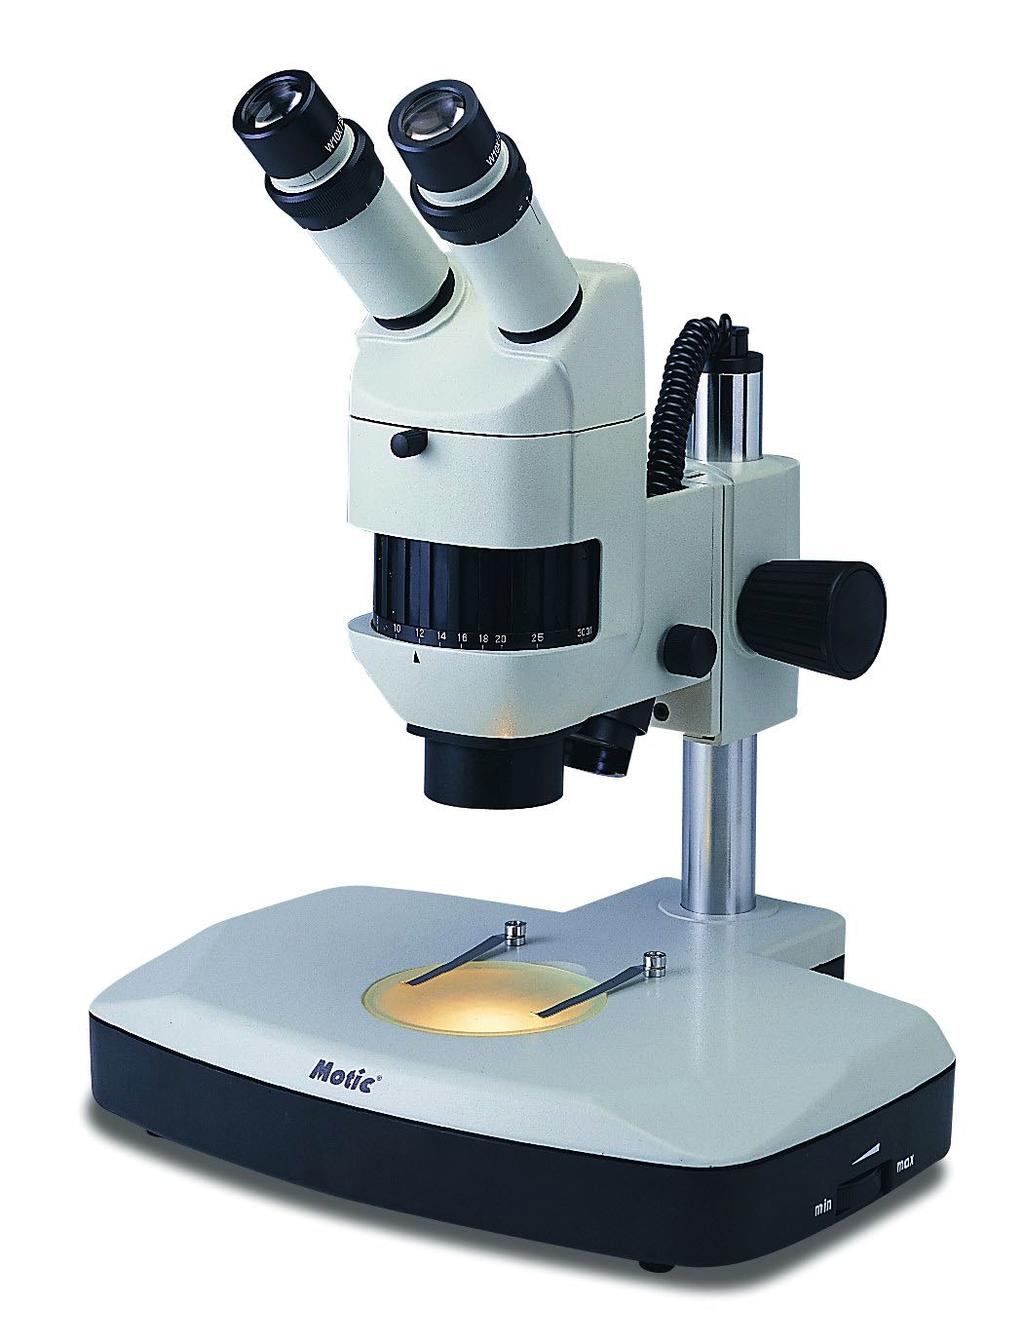 2. Nomenclature and Function Model K 500 Stereo Microscope Model K 700